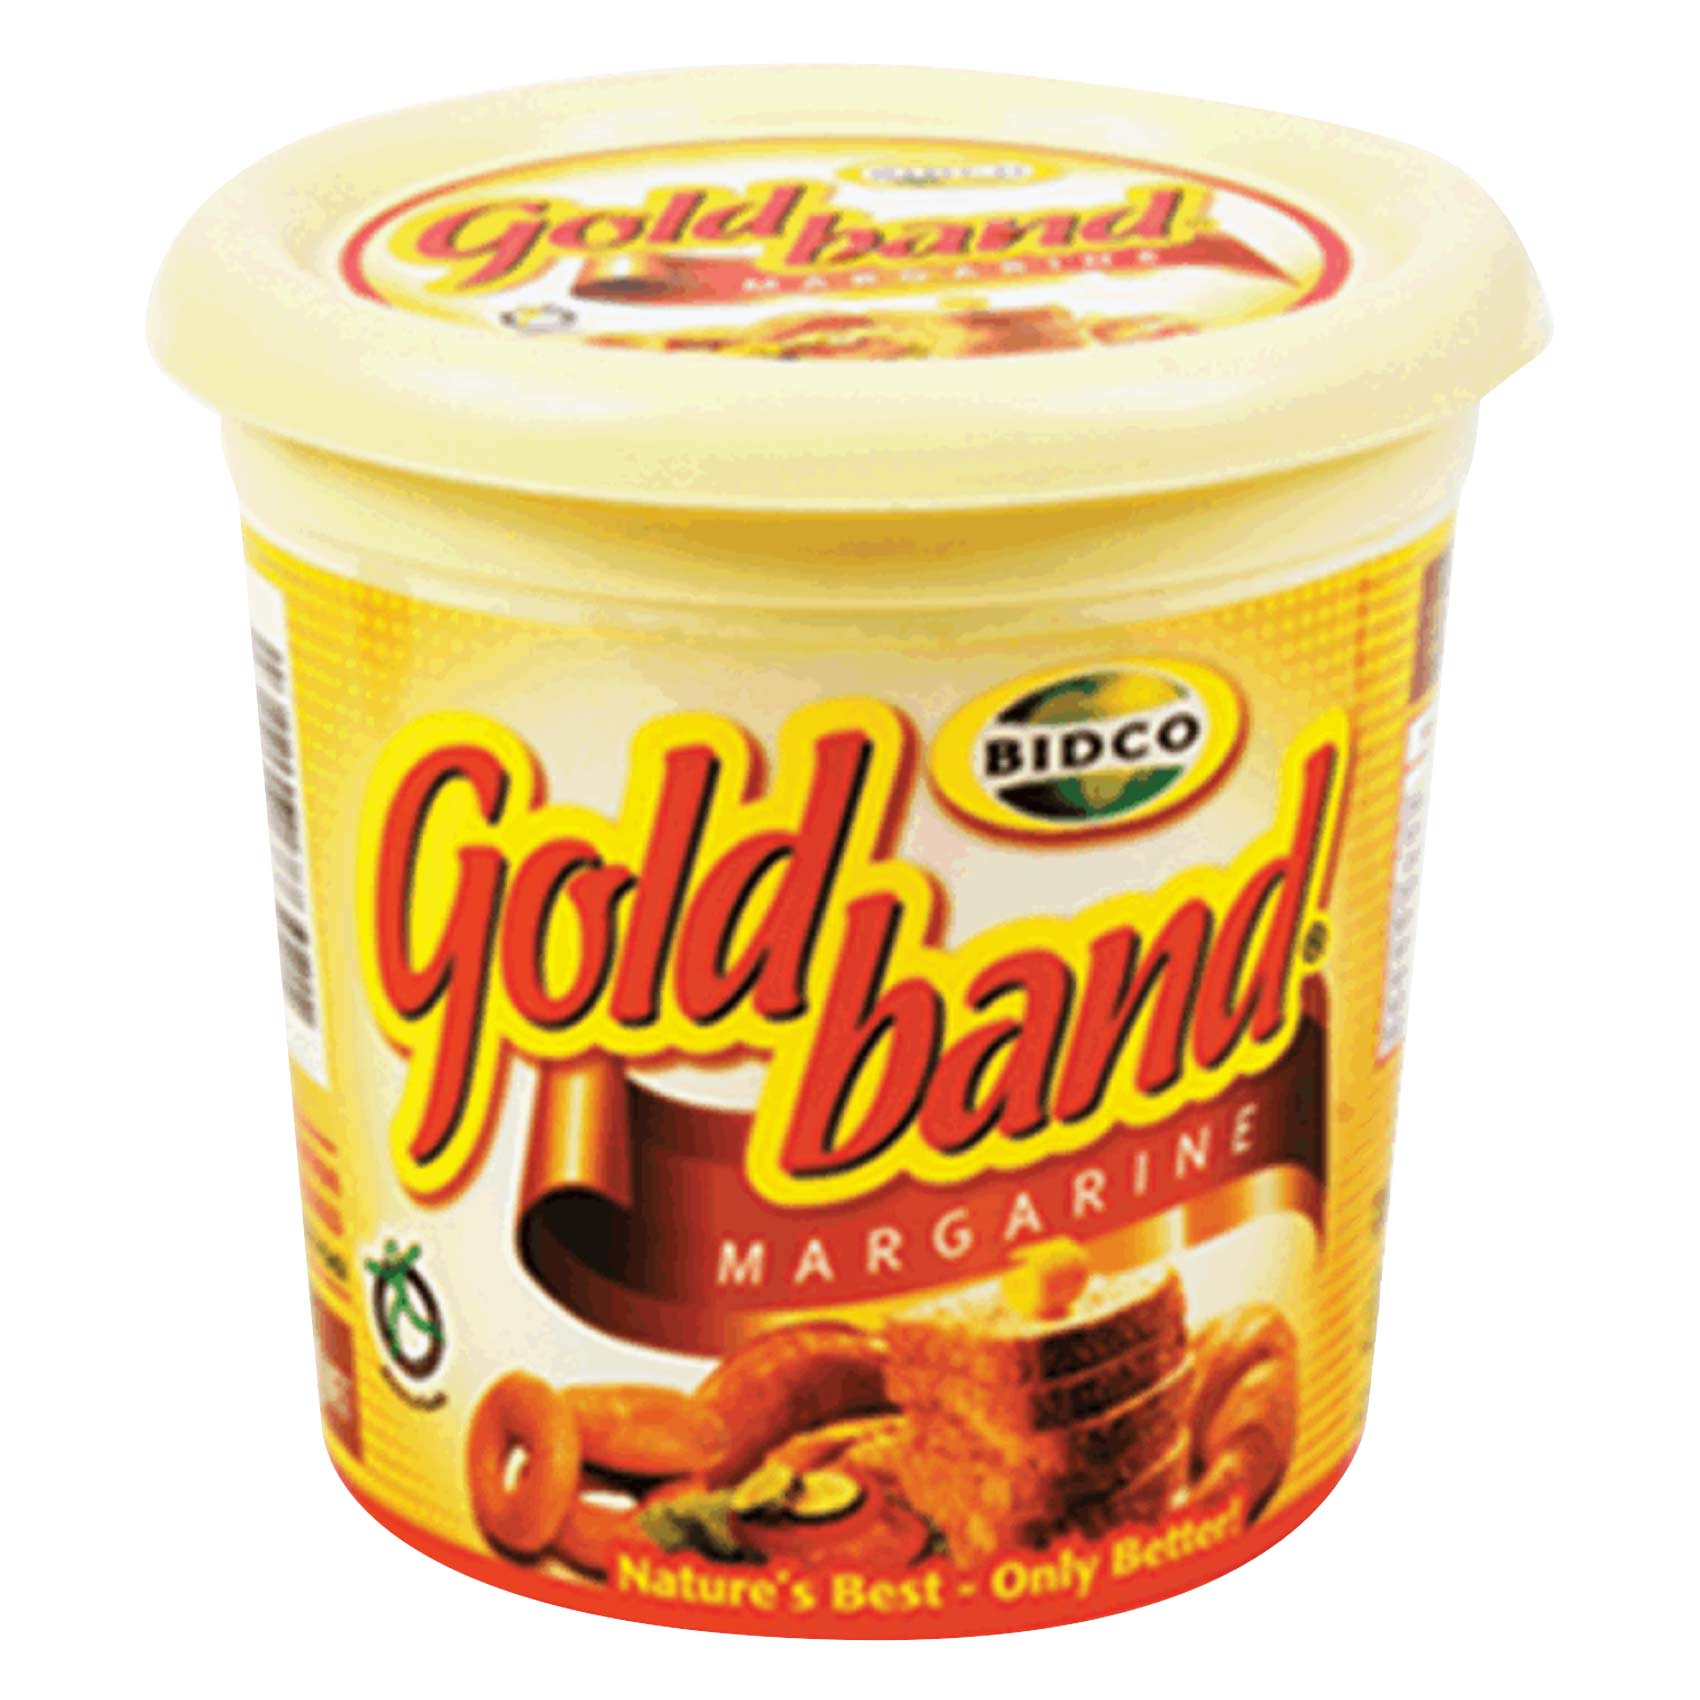 Gold Band Band Margarine 1kg